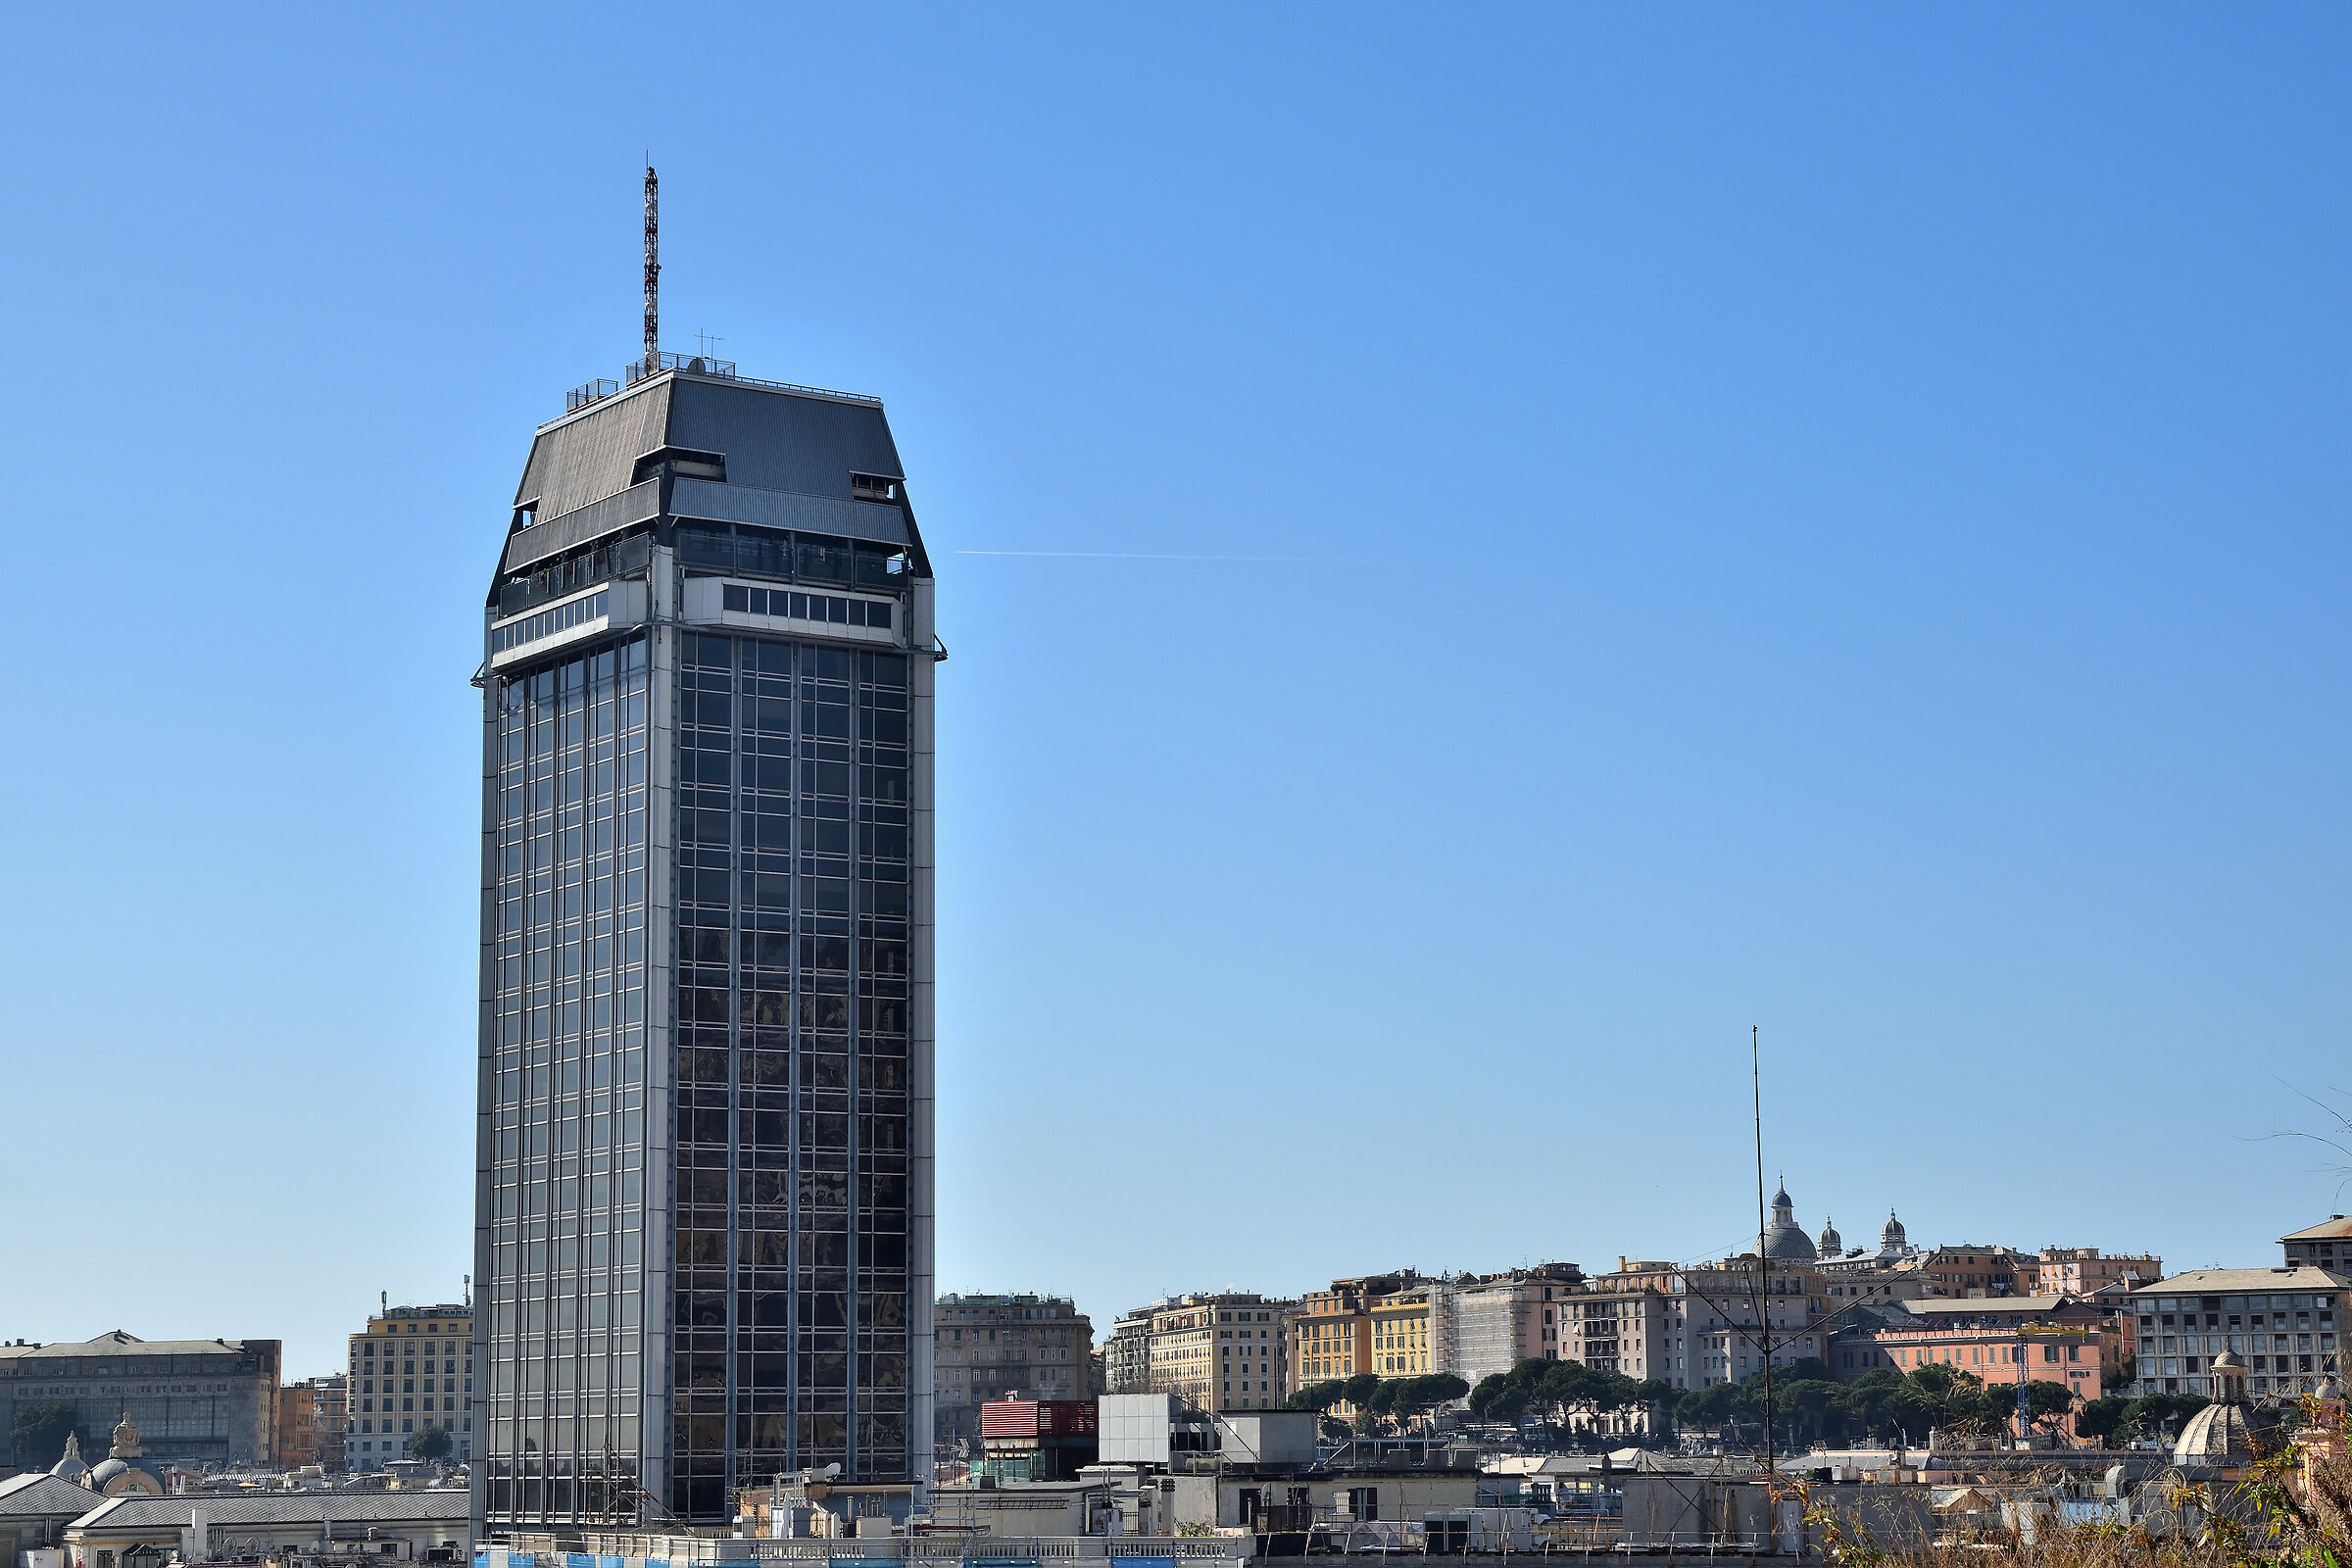 Confindustria skyscraper (Genoa Brignole)...